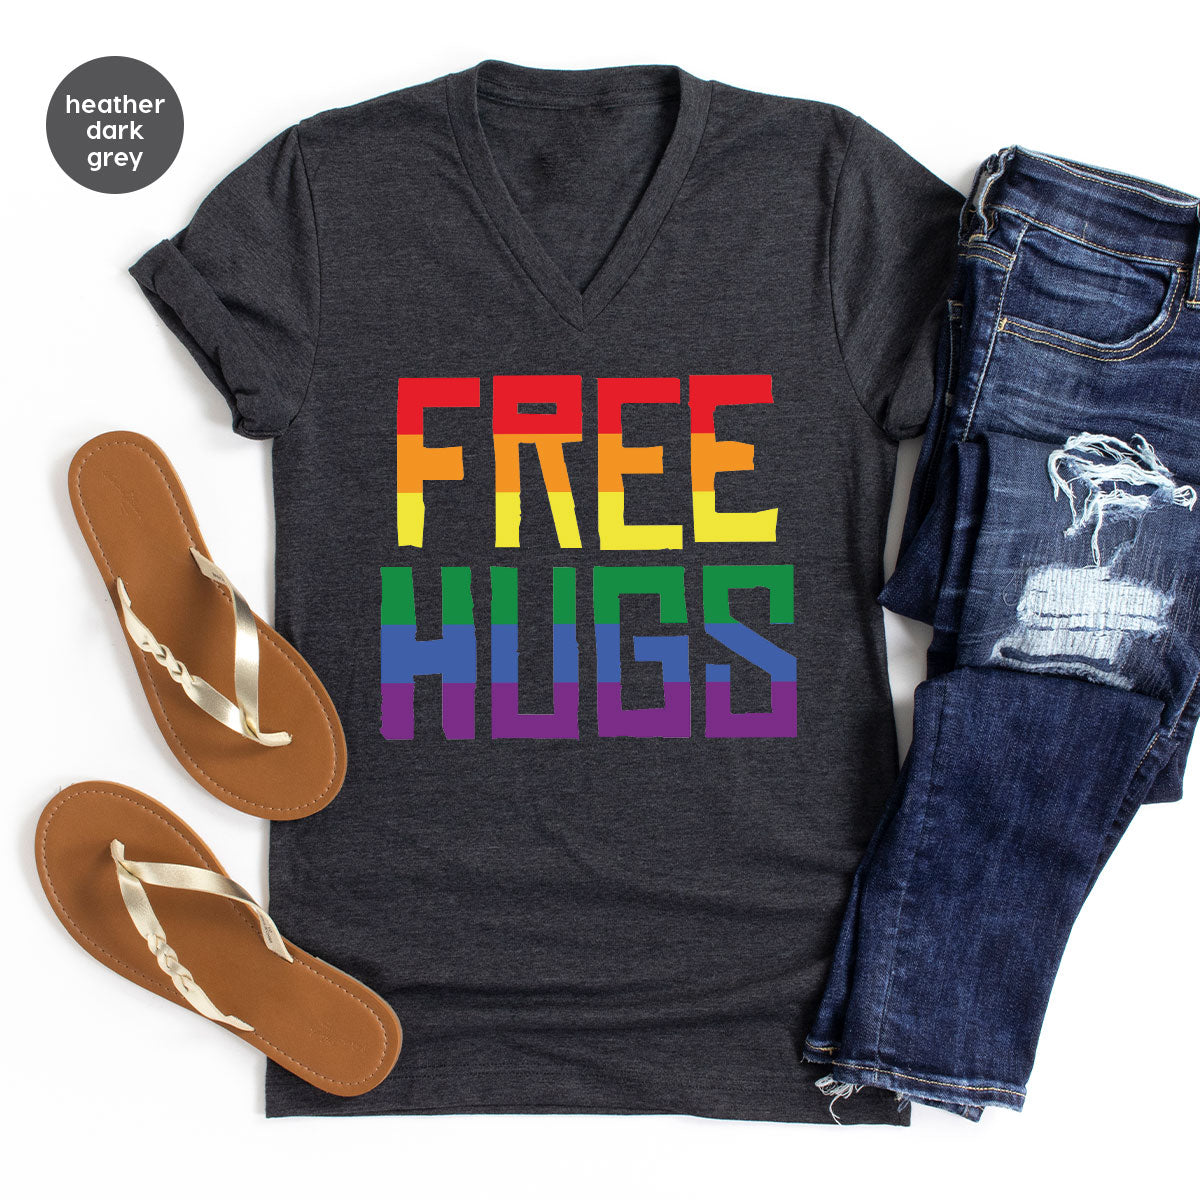 Cute LGBT Shirt, Free Hugs T-Shirt, Lovely Pride T-Shirt for LGBT